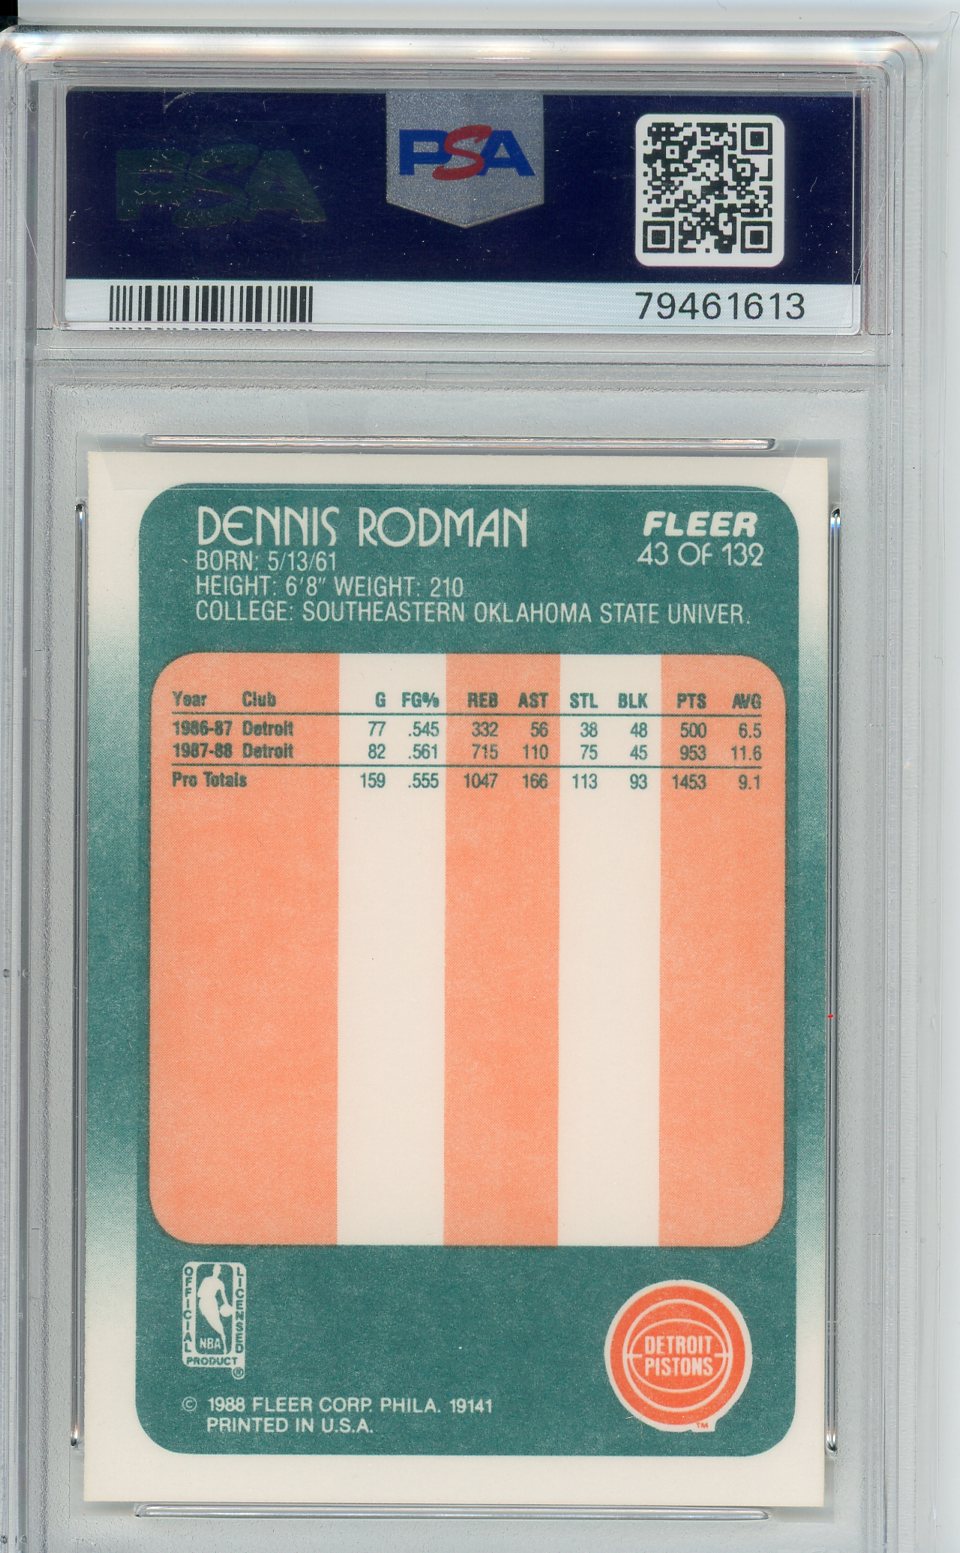 1988 Fleer Dennis Rodman #43 Graded Rookie Card PSA 8